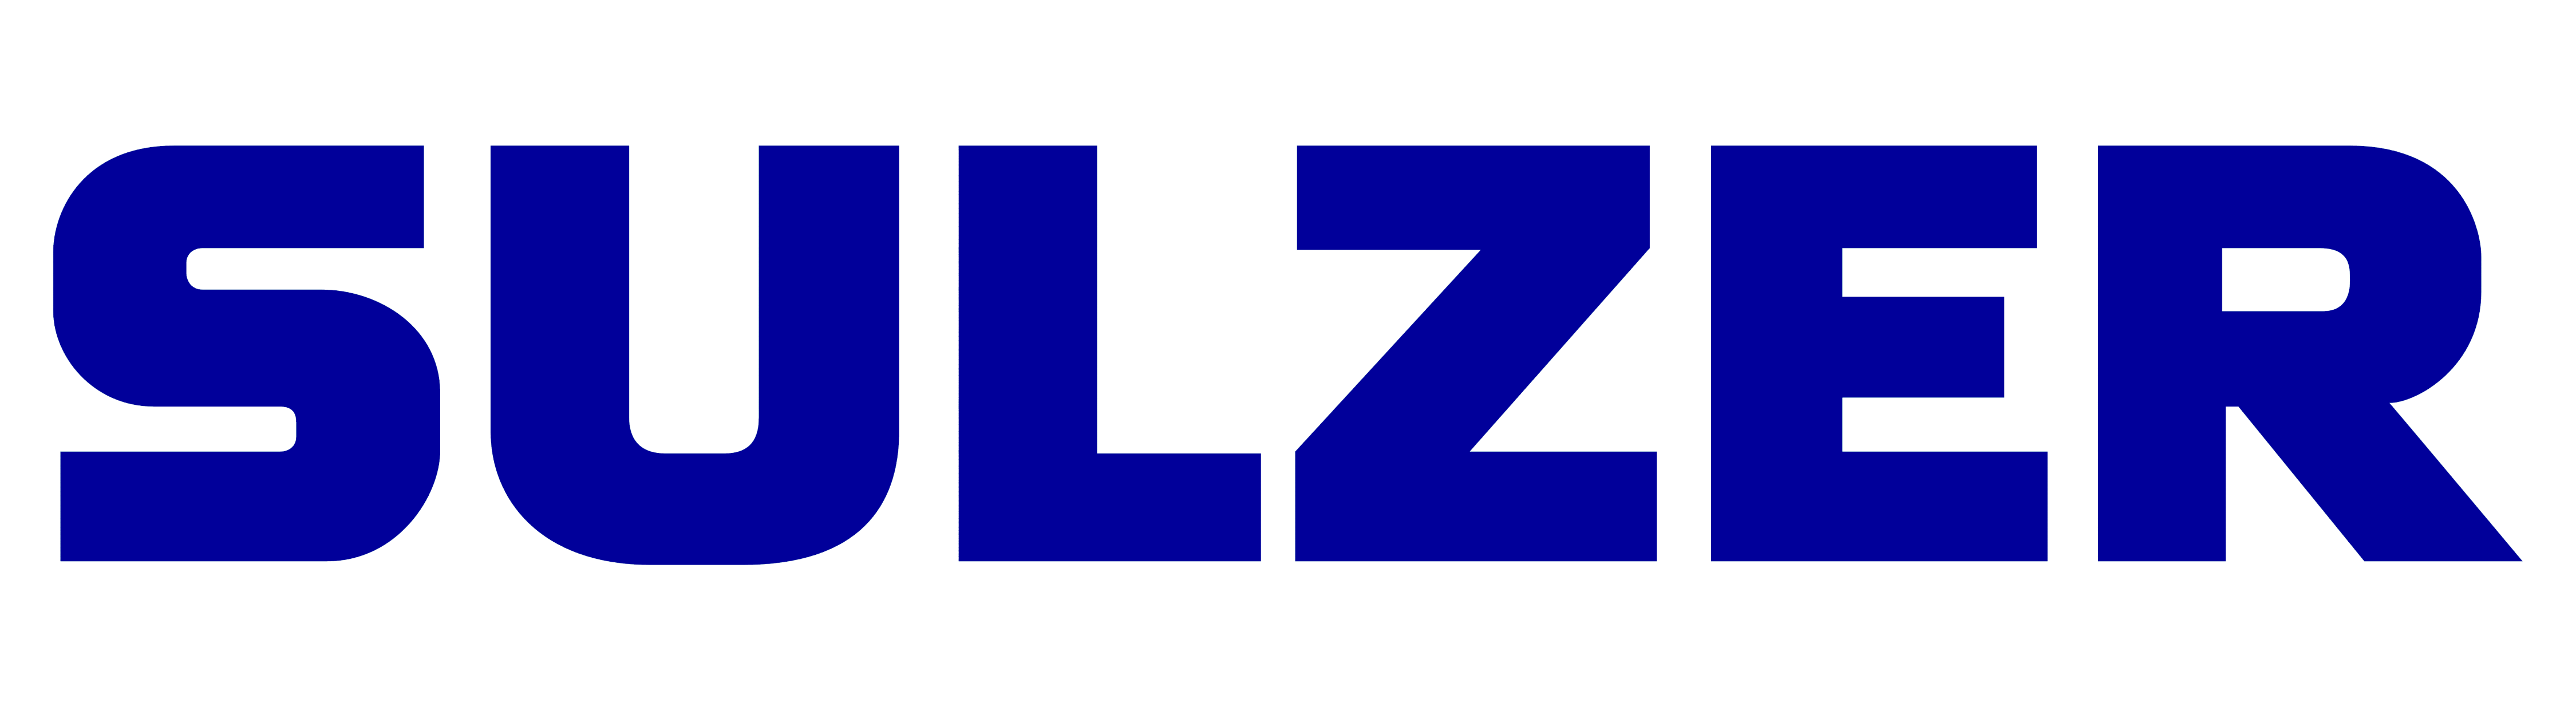 sulzer-logo